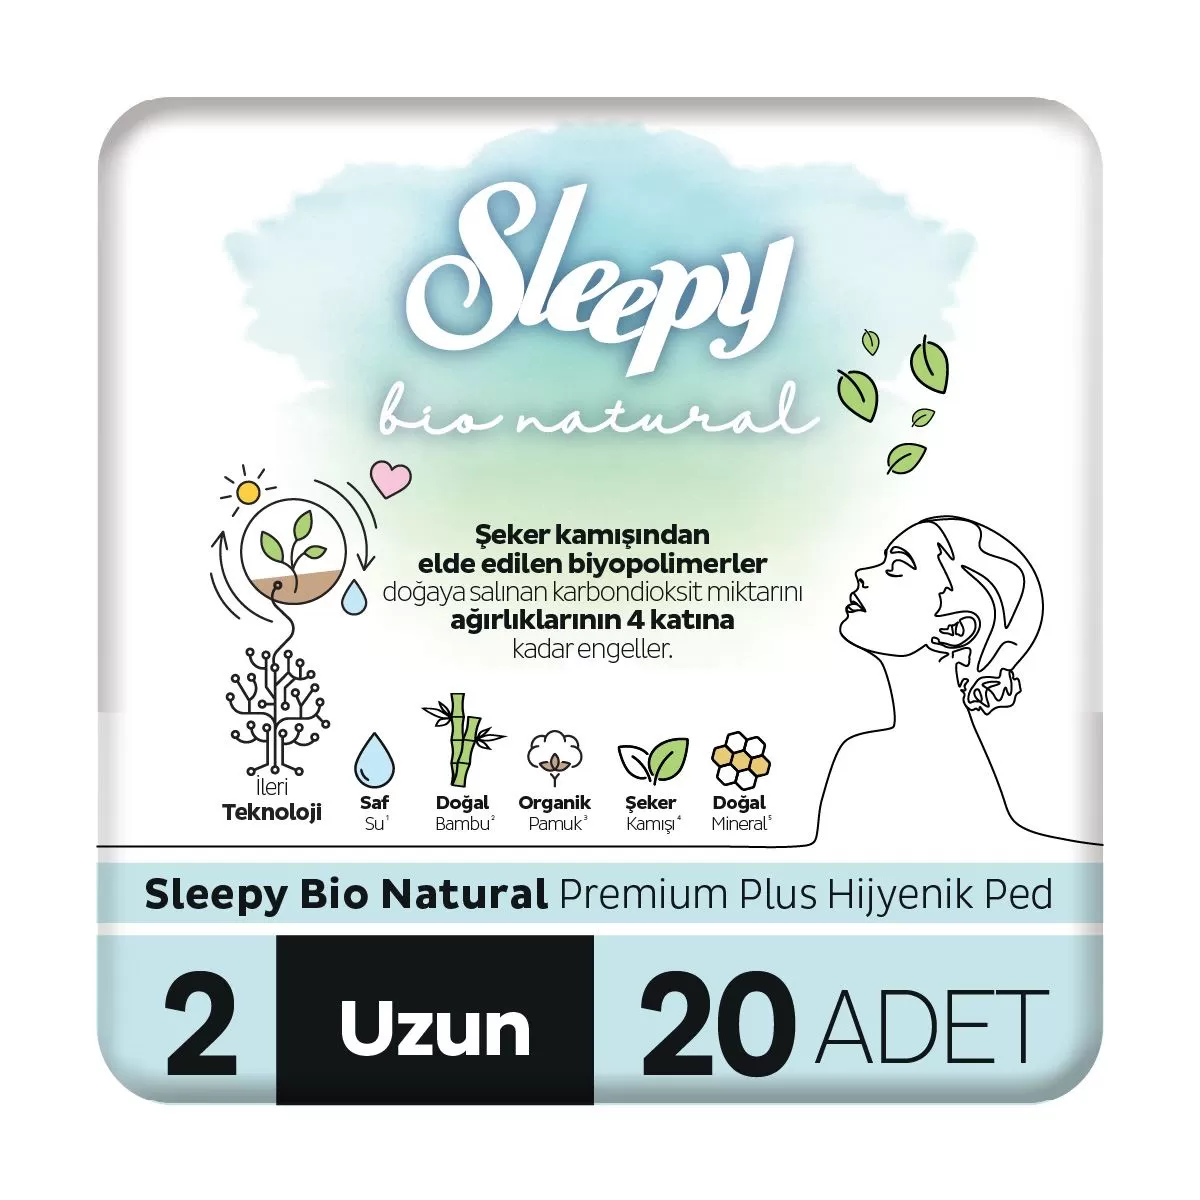 Sleepy Bio Natural Premium Plus Hijyenik Ped Uzun 20x4 80 Adet Ped